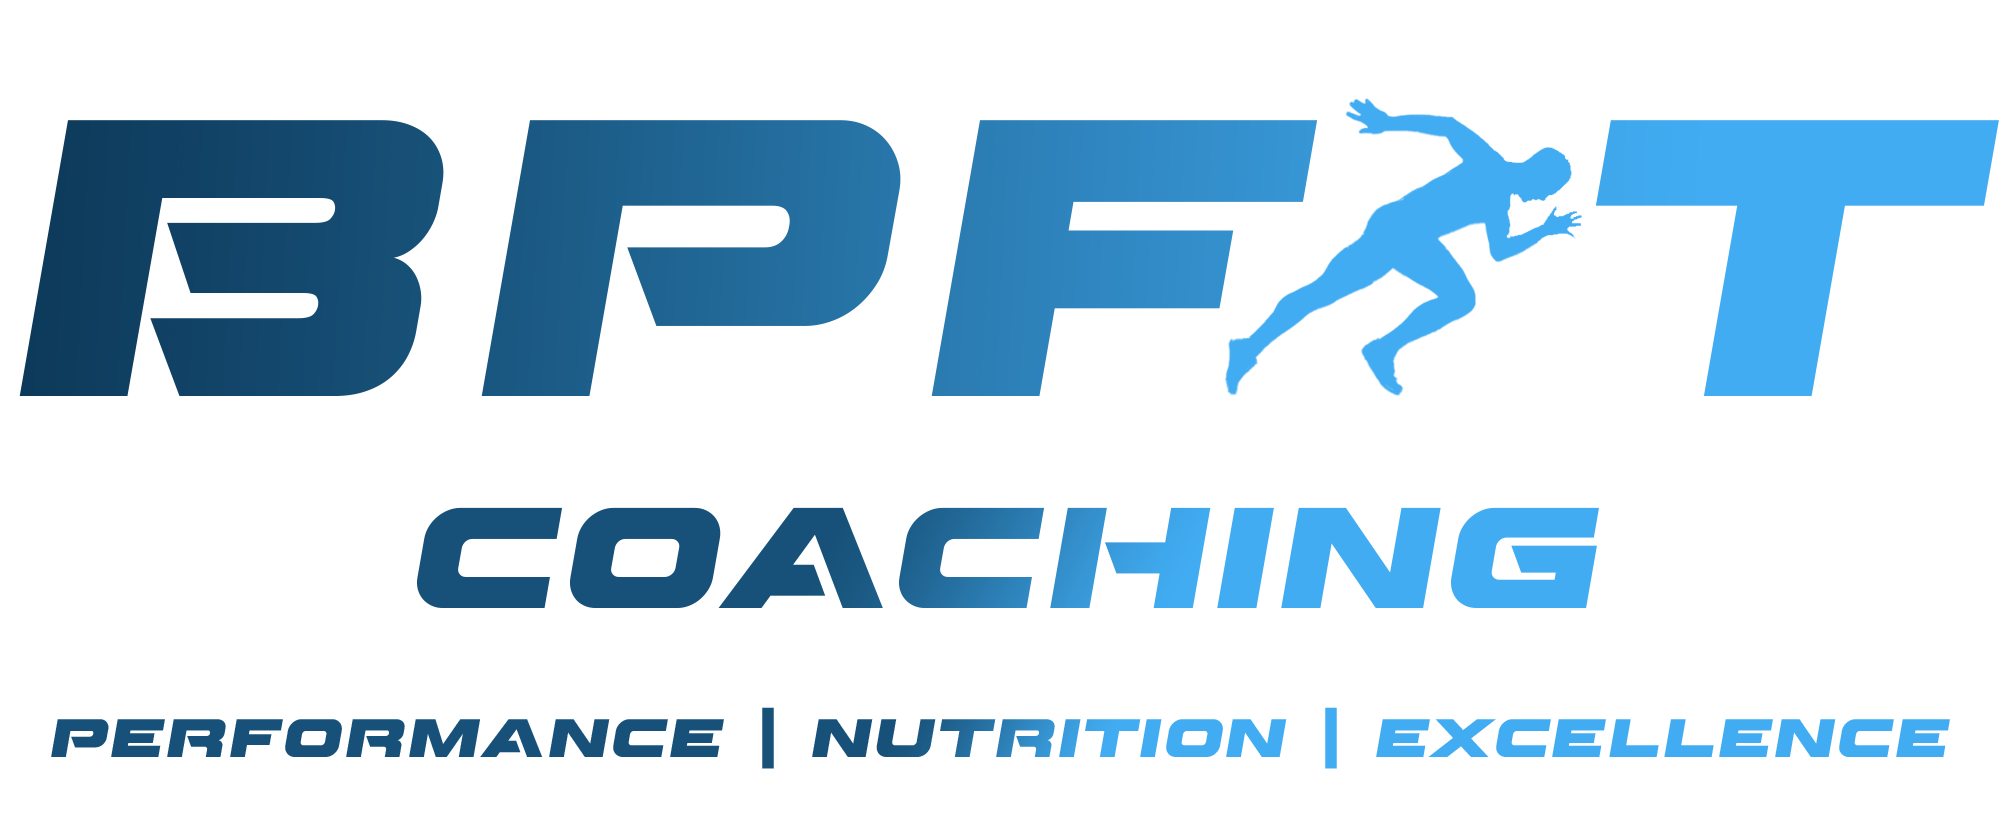 Bradshaw Personal Fitness: Sport Performance| Fitness| Nutrition